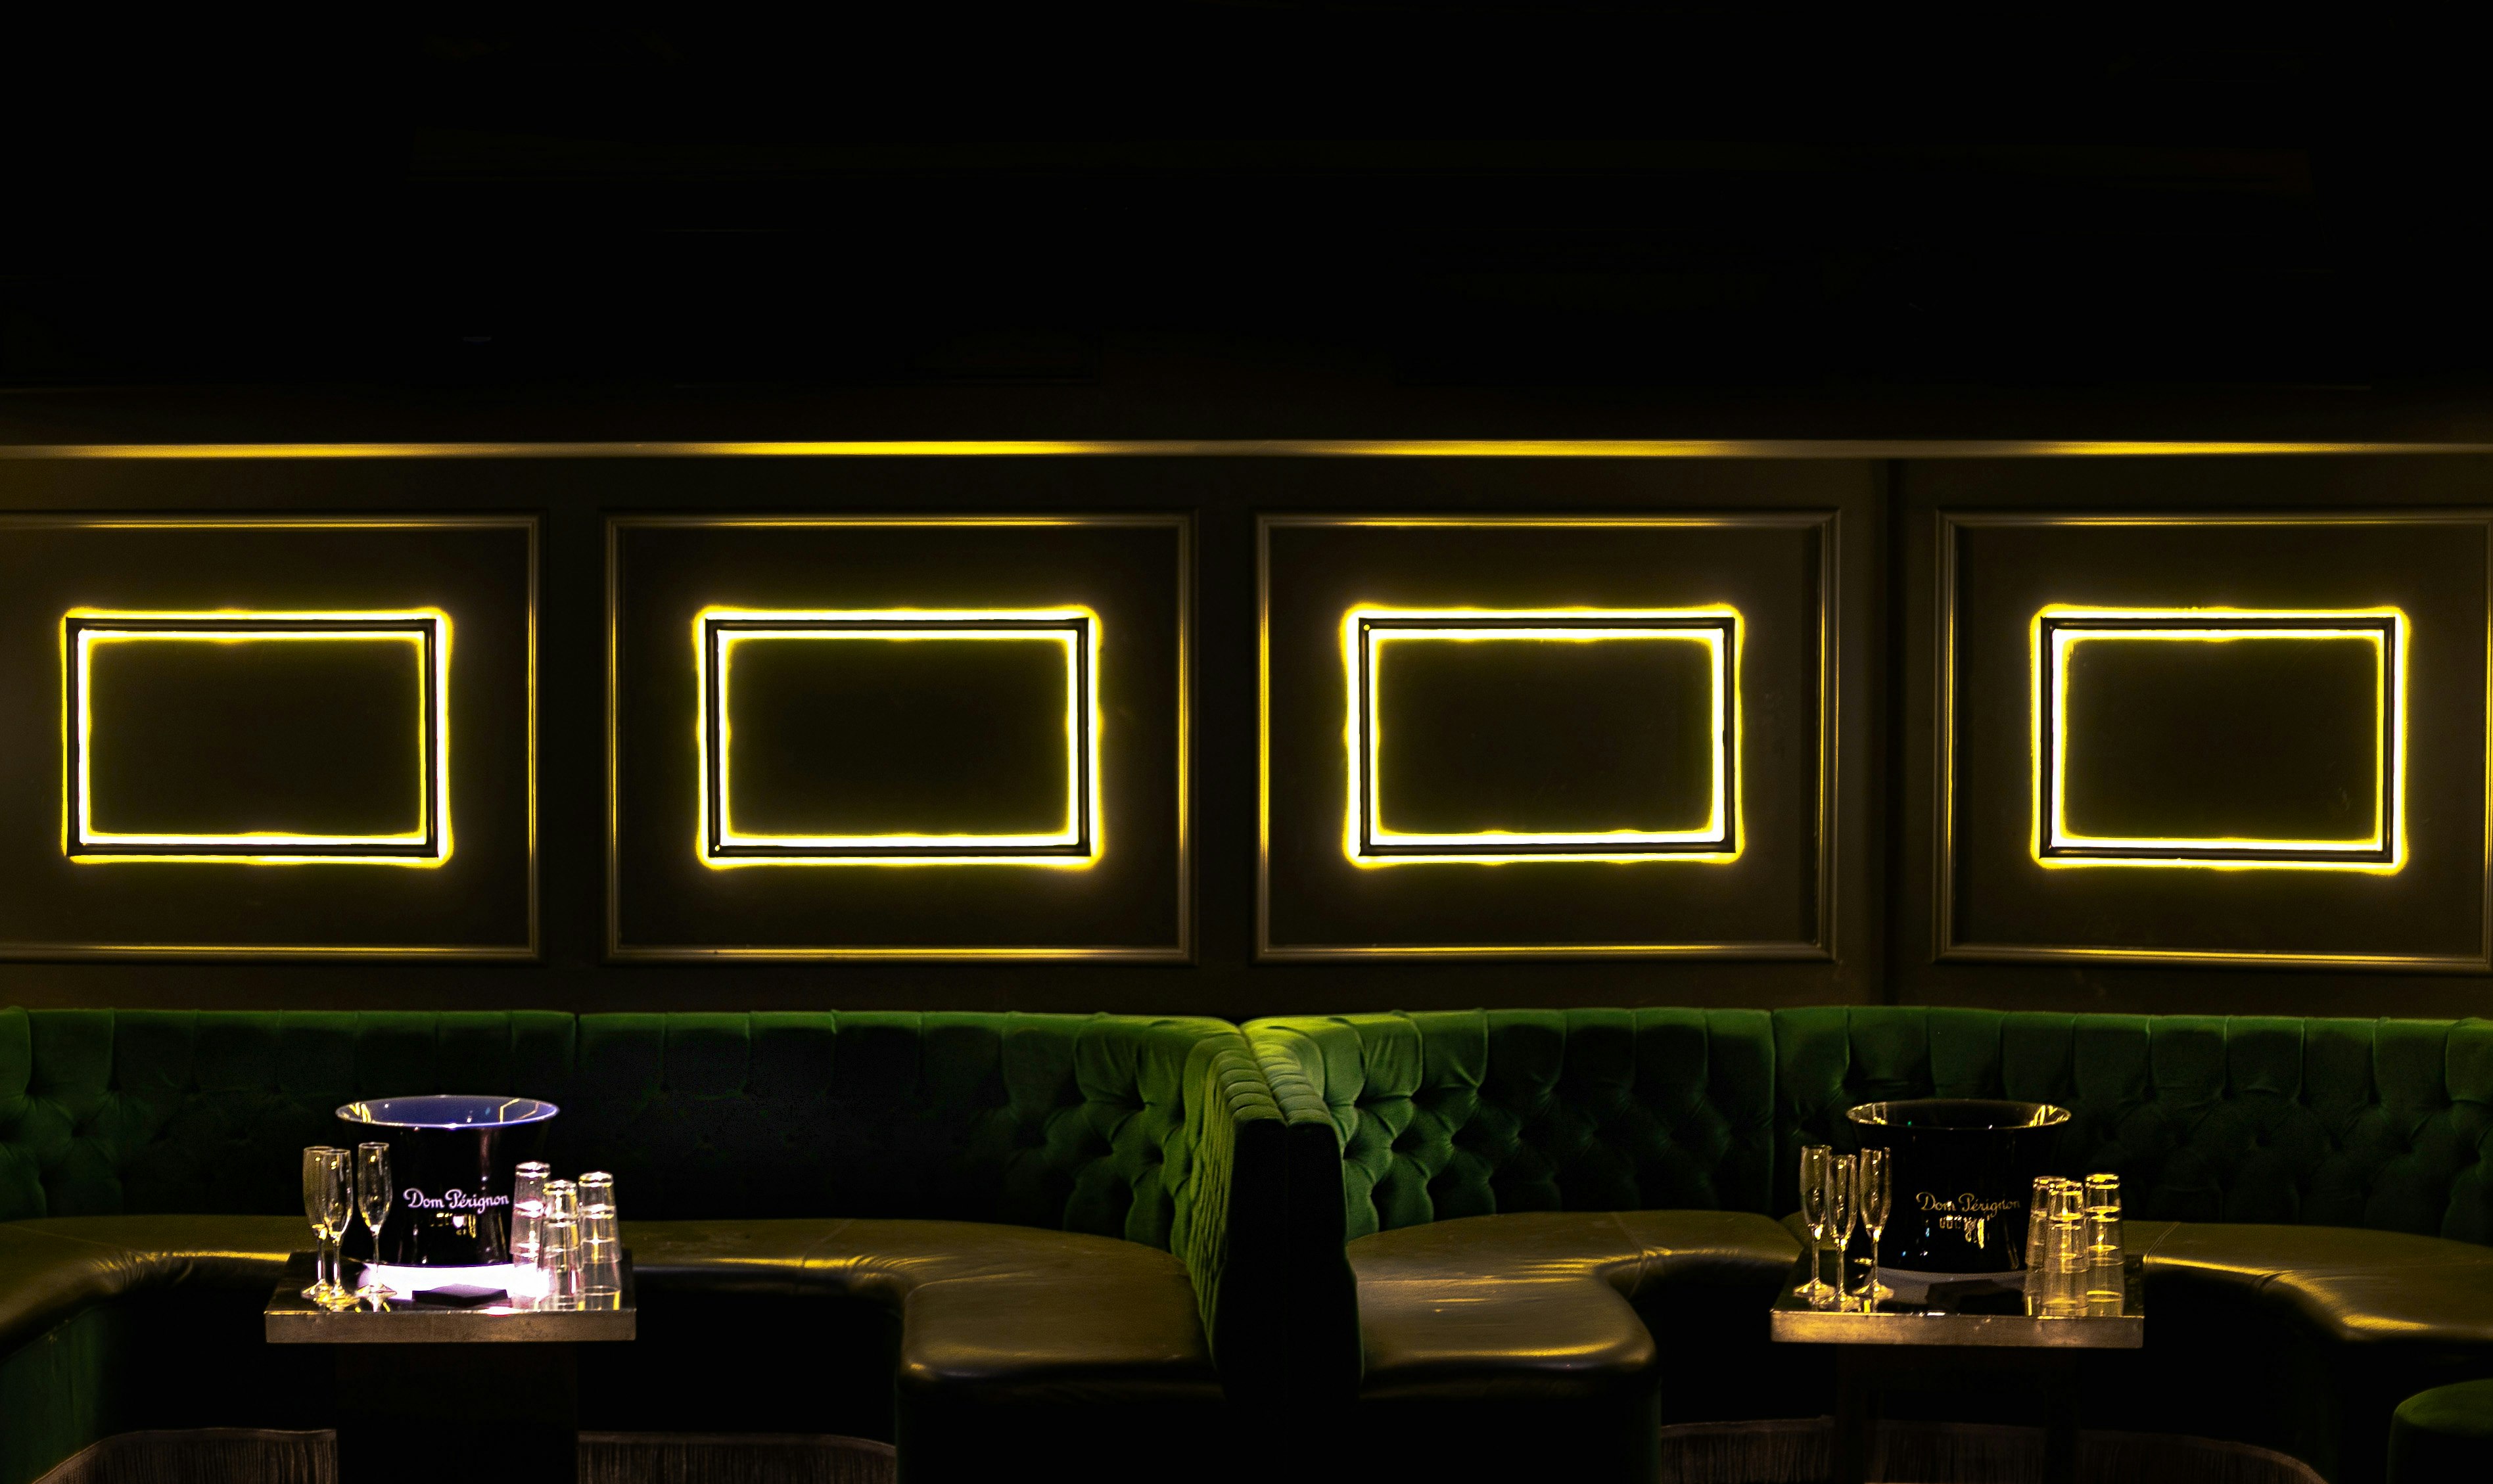 Maddox Club Mayfair - Green Room image 4